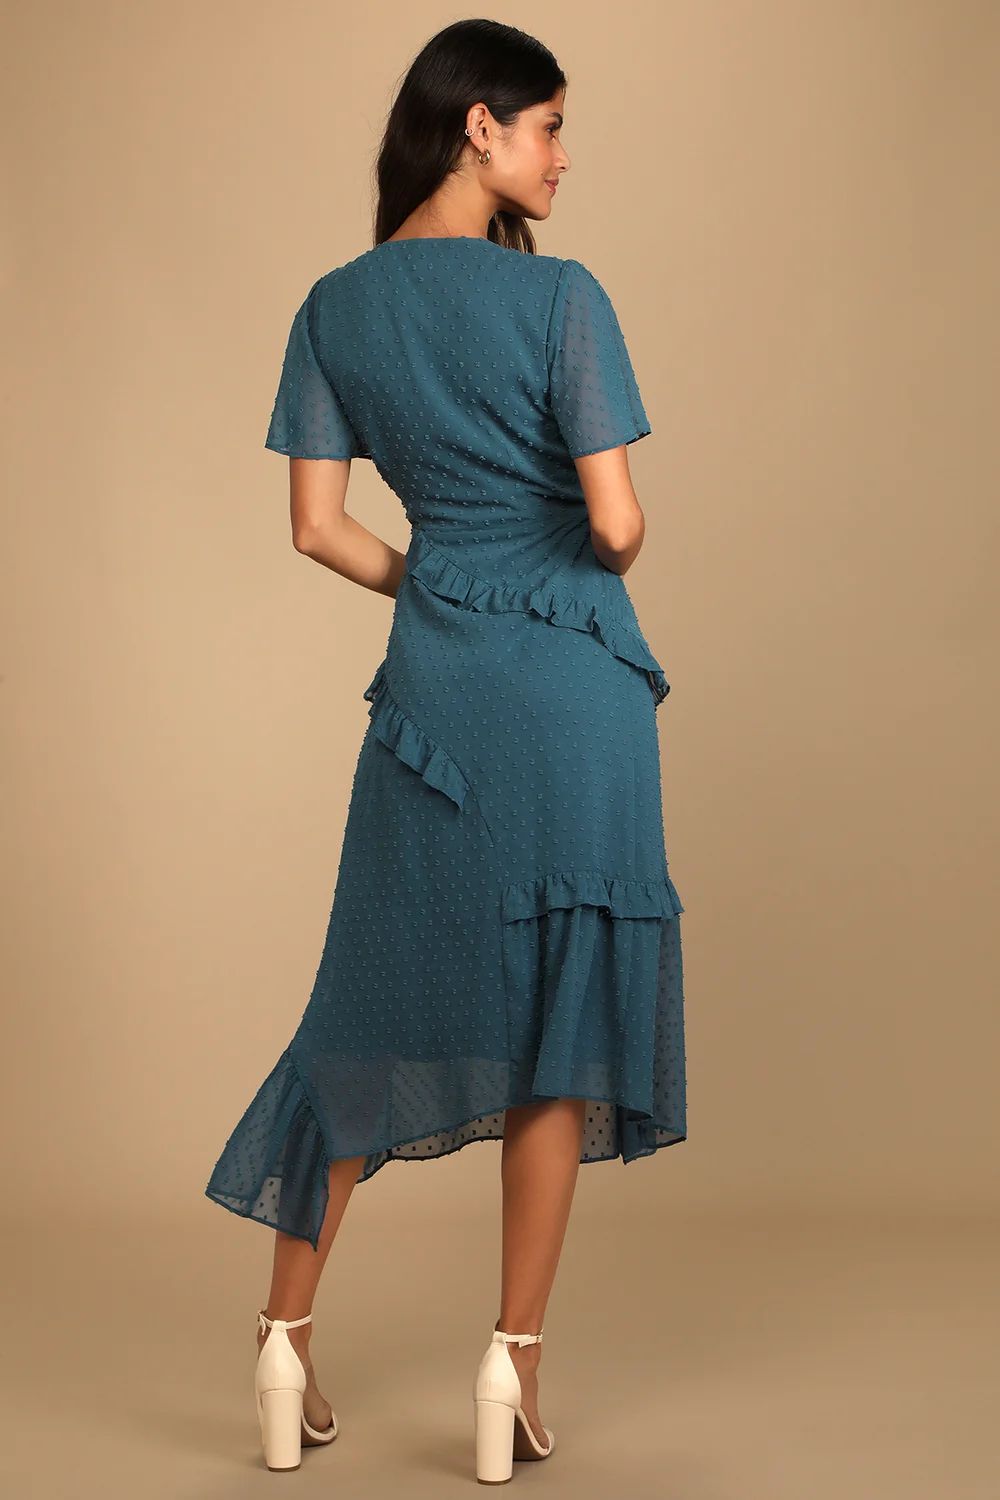 Next to You Slate Blue Swiss Dot Ruffled Midi Dress | Lulus (US)